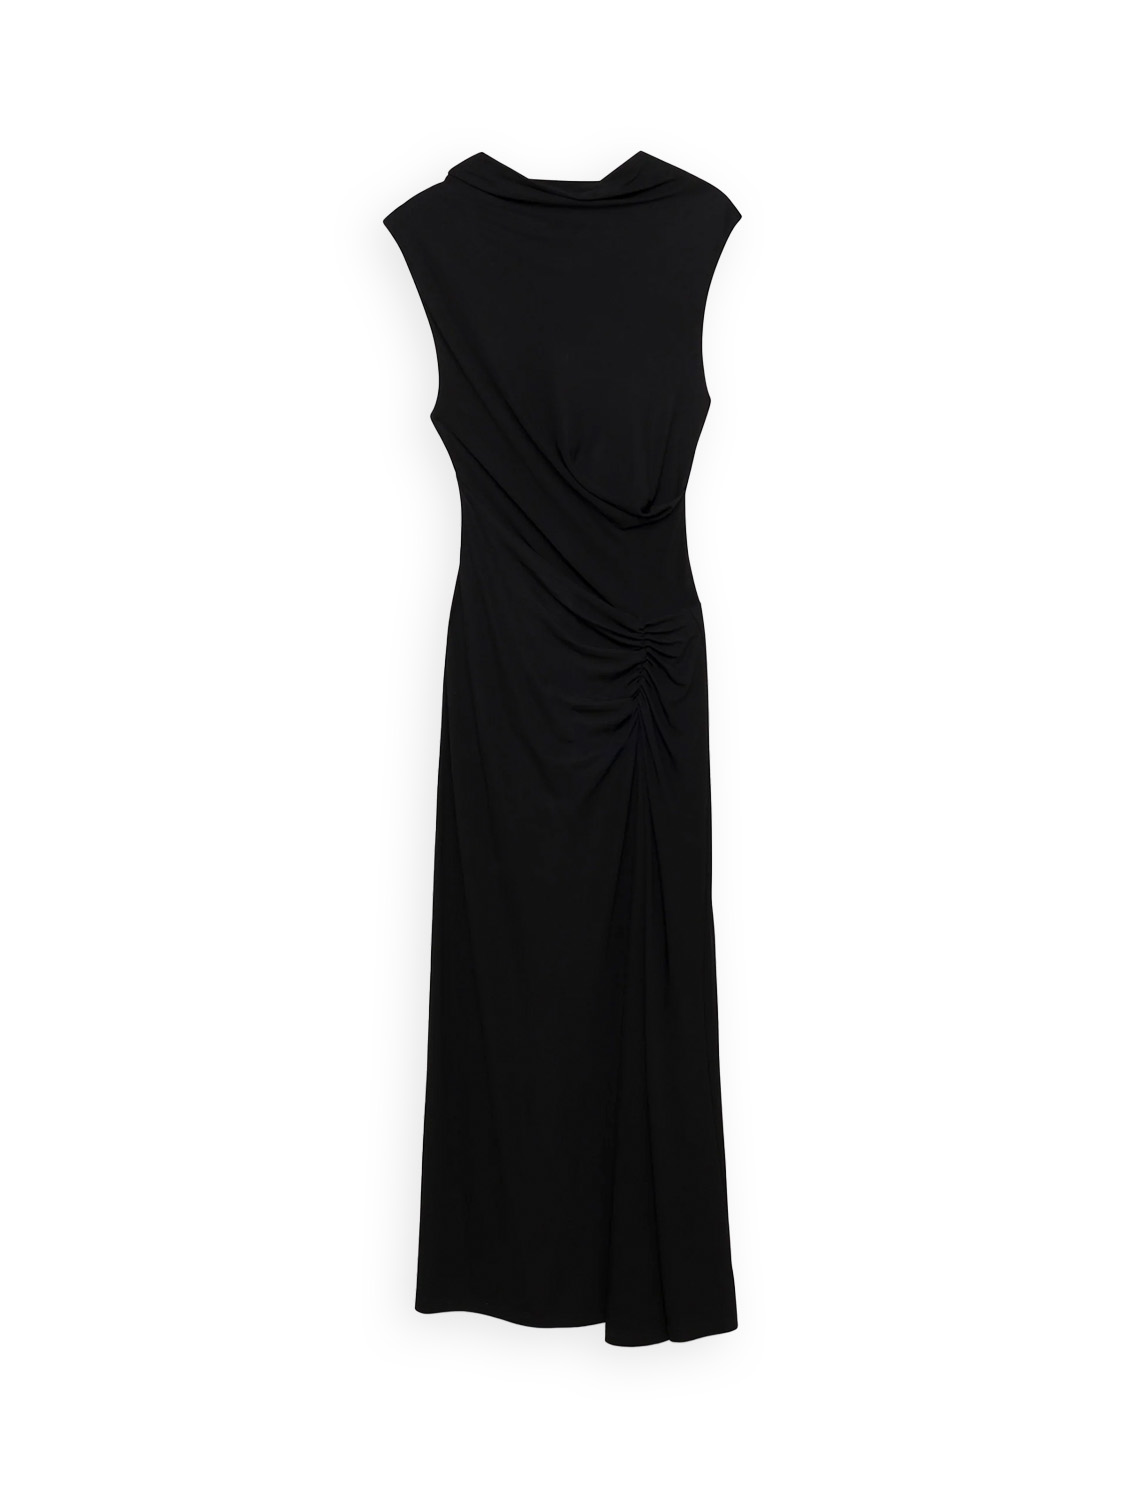 Acacia – Midi dress with flattering gathered waist  